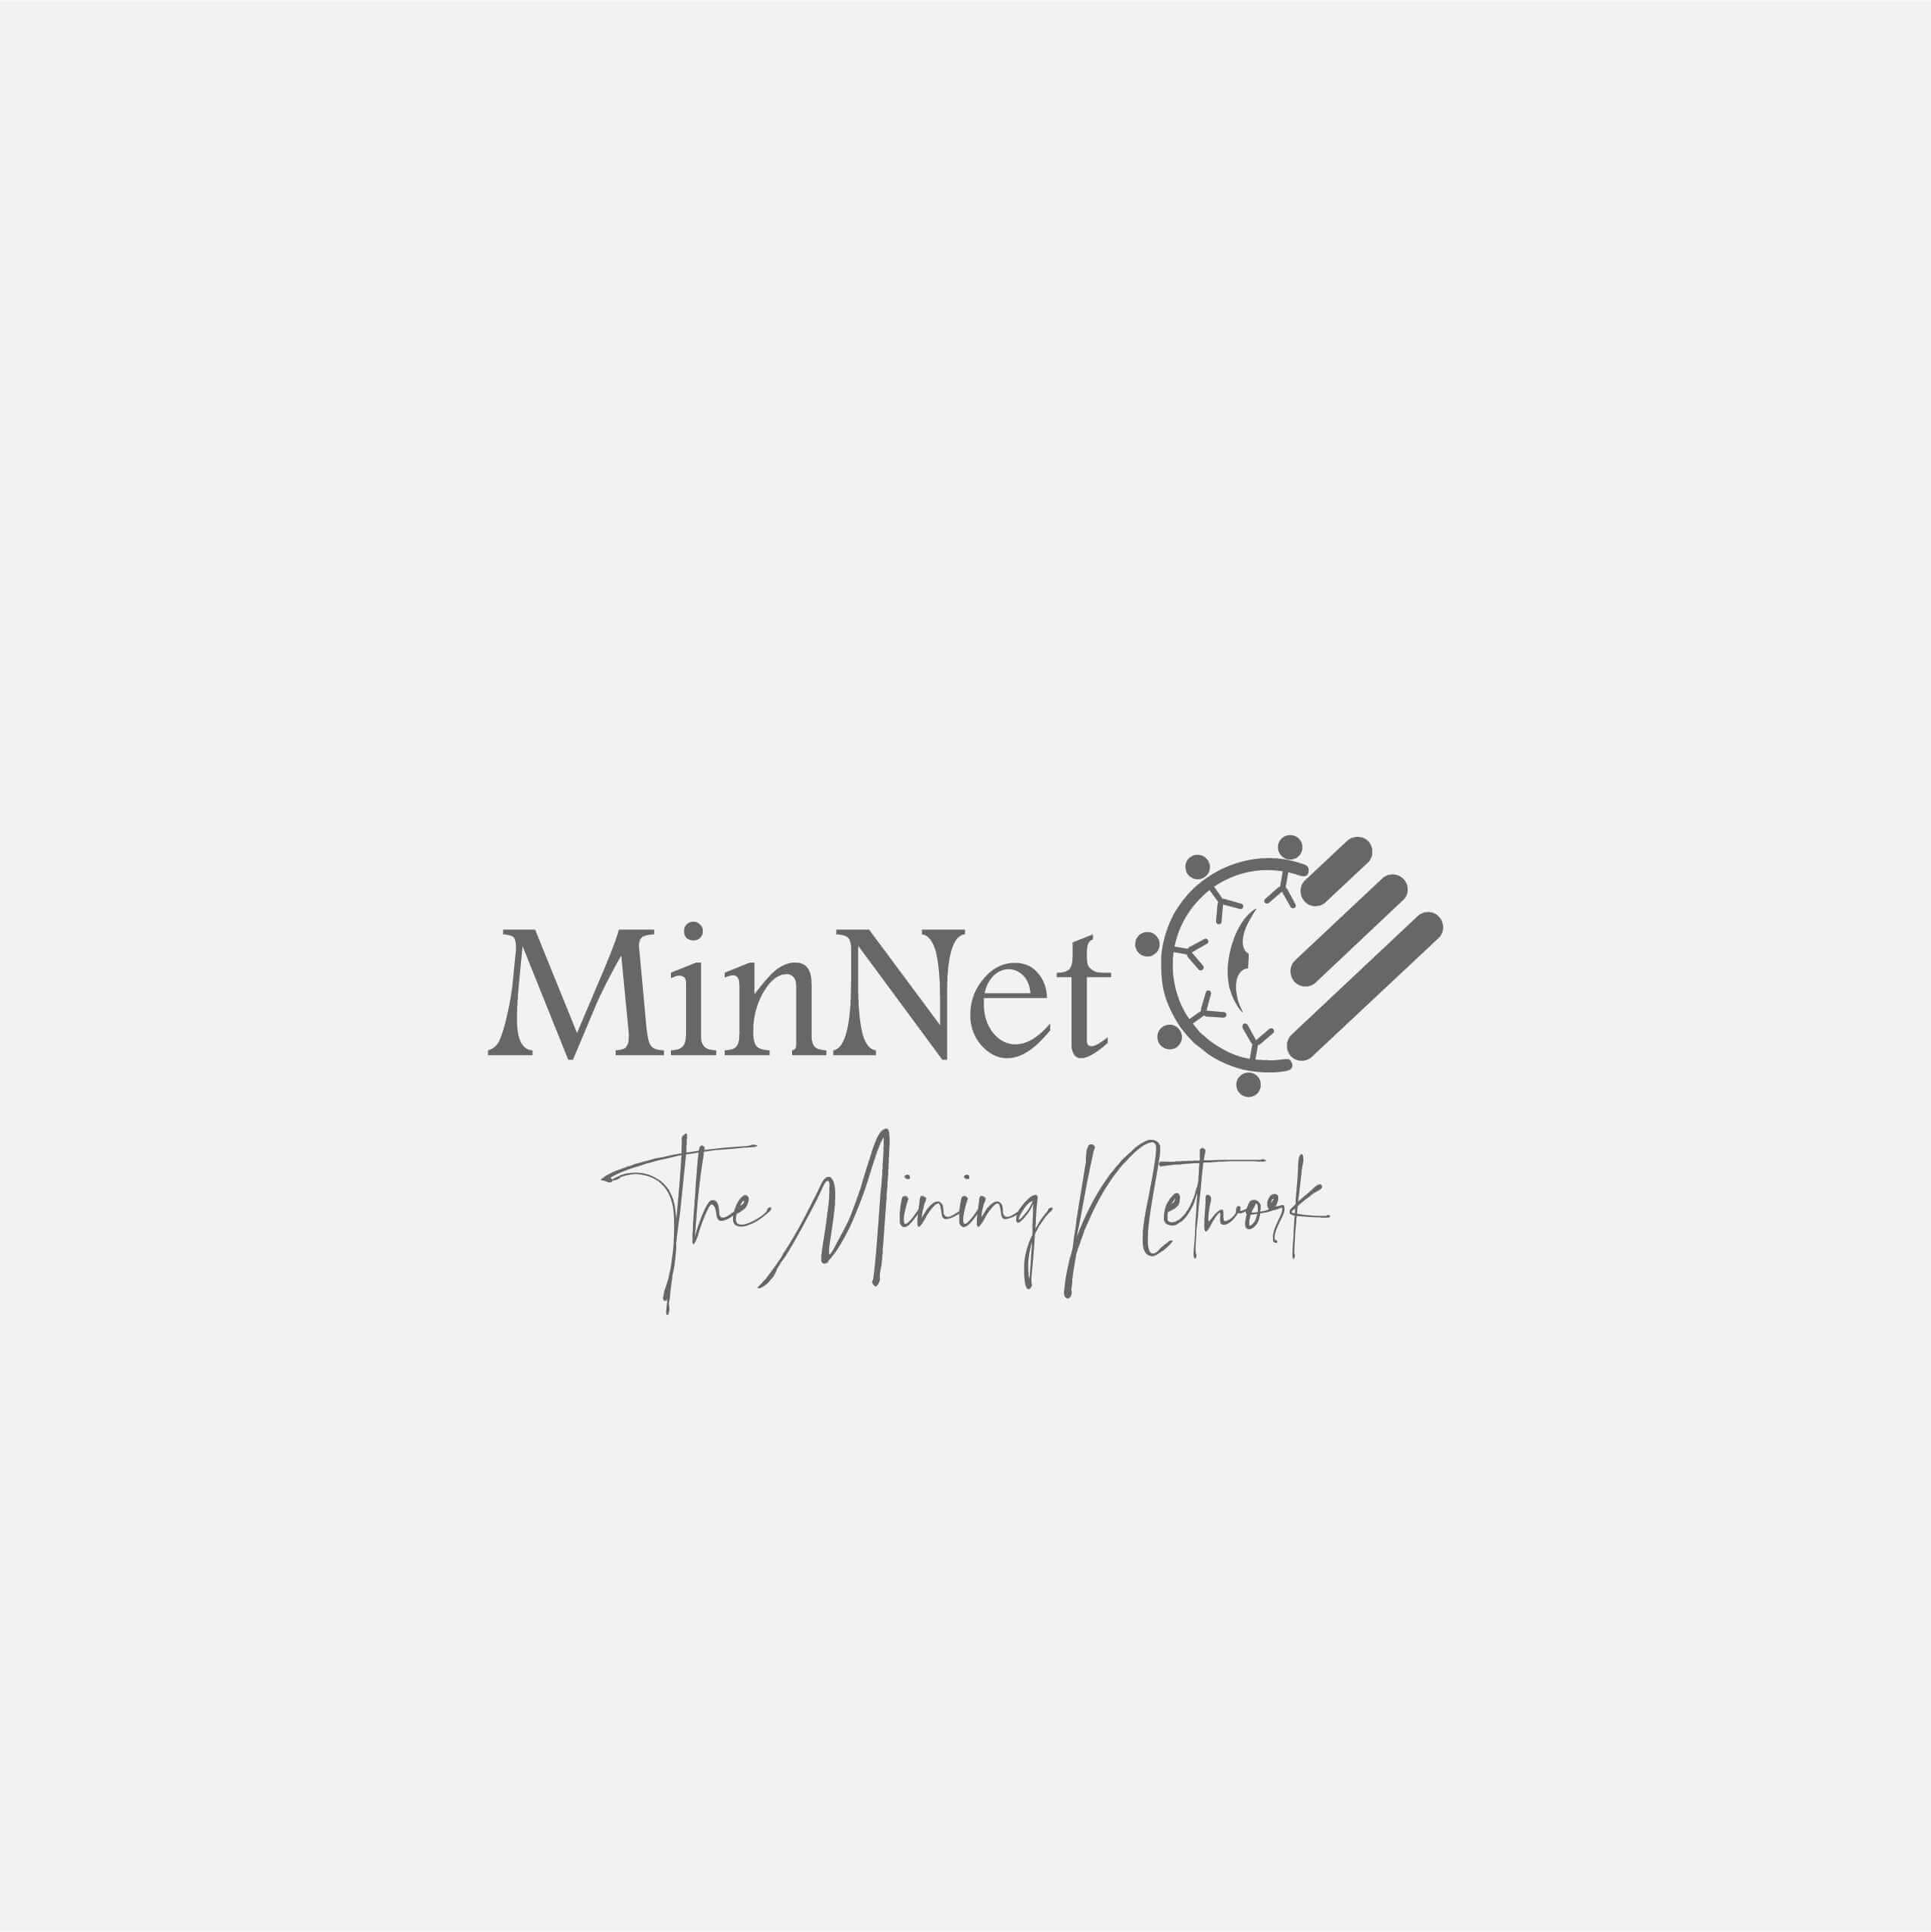 MinNet